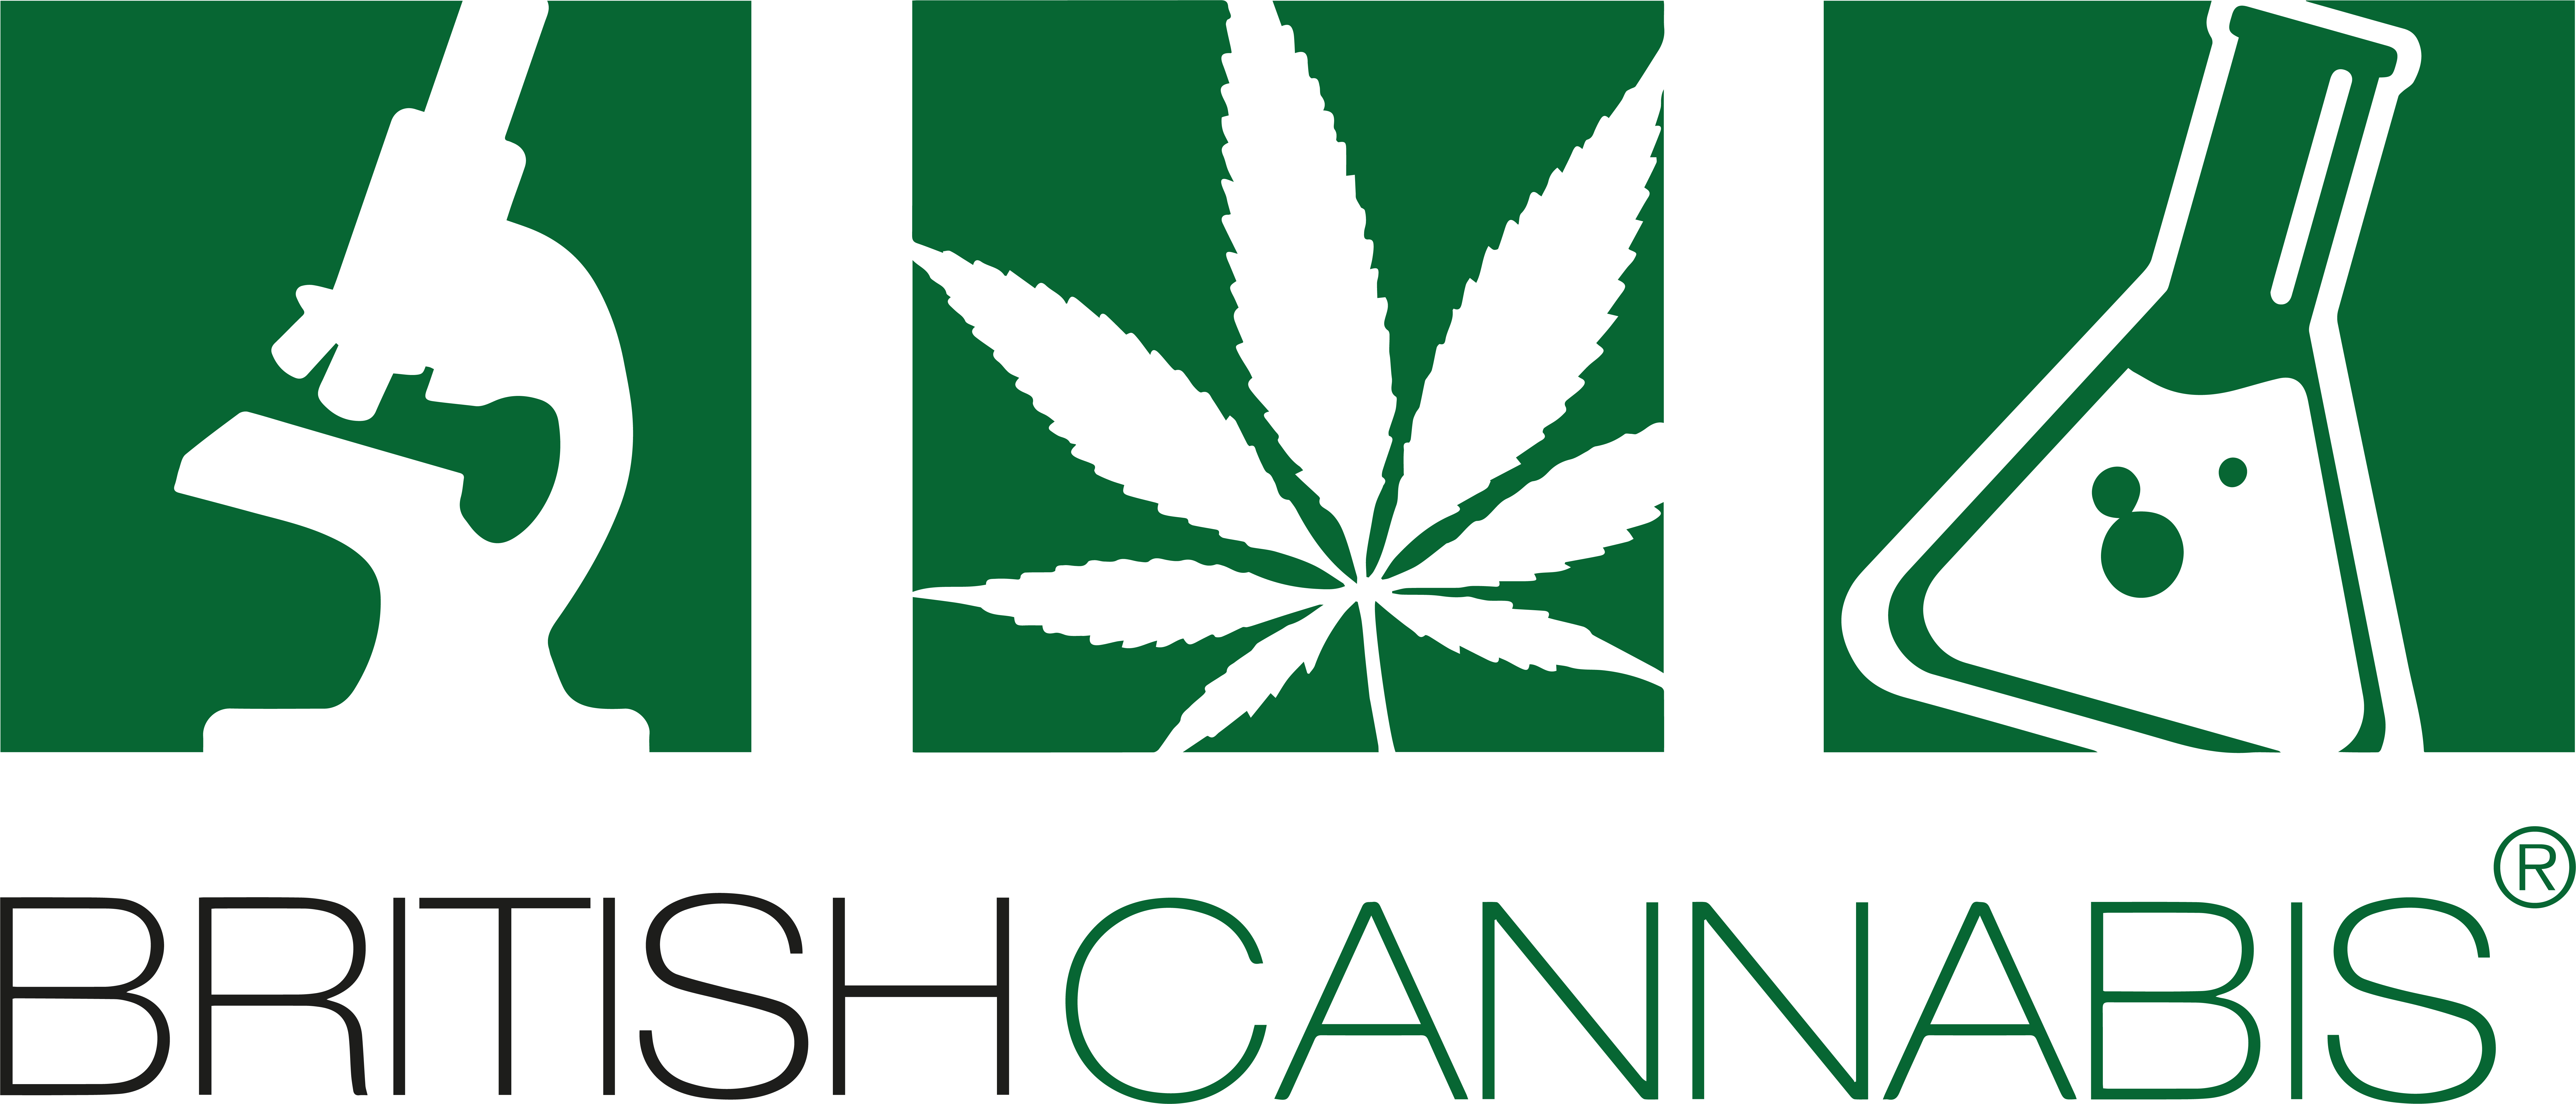 British Cannabis logo